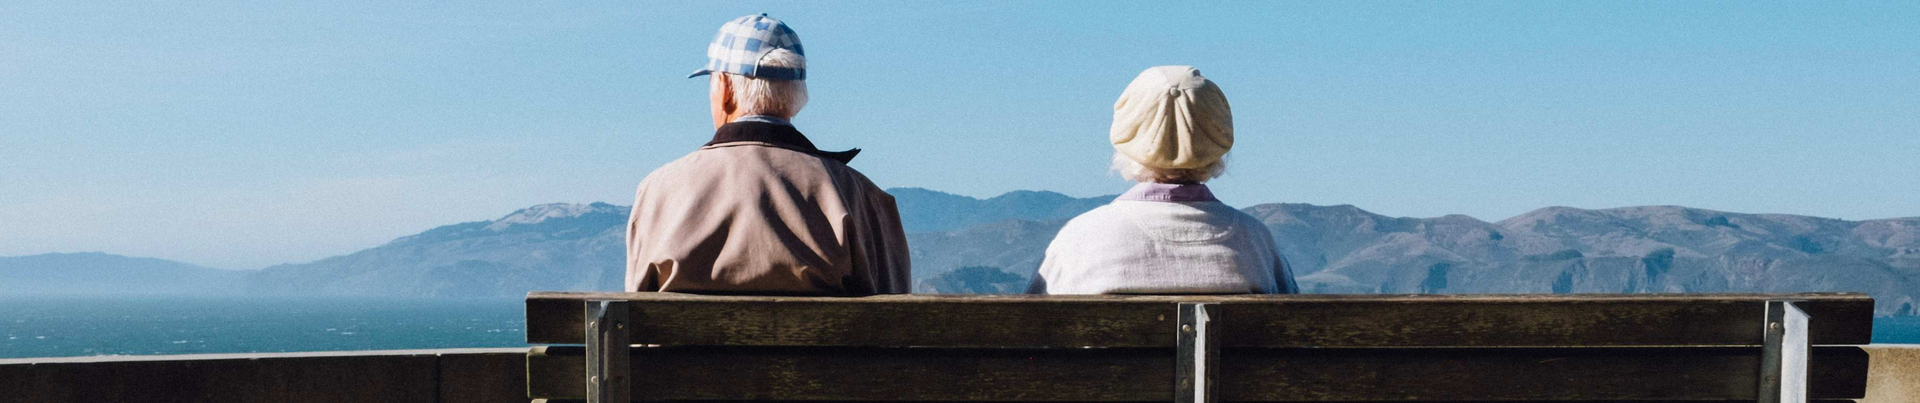 Uomo con demenza seduto su una panchina con sua moglie